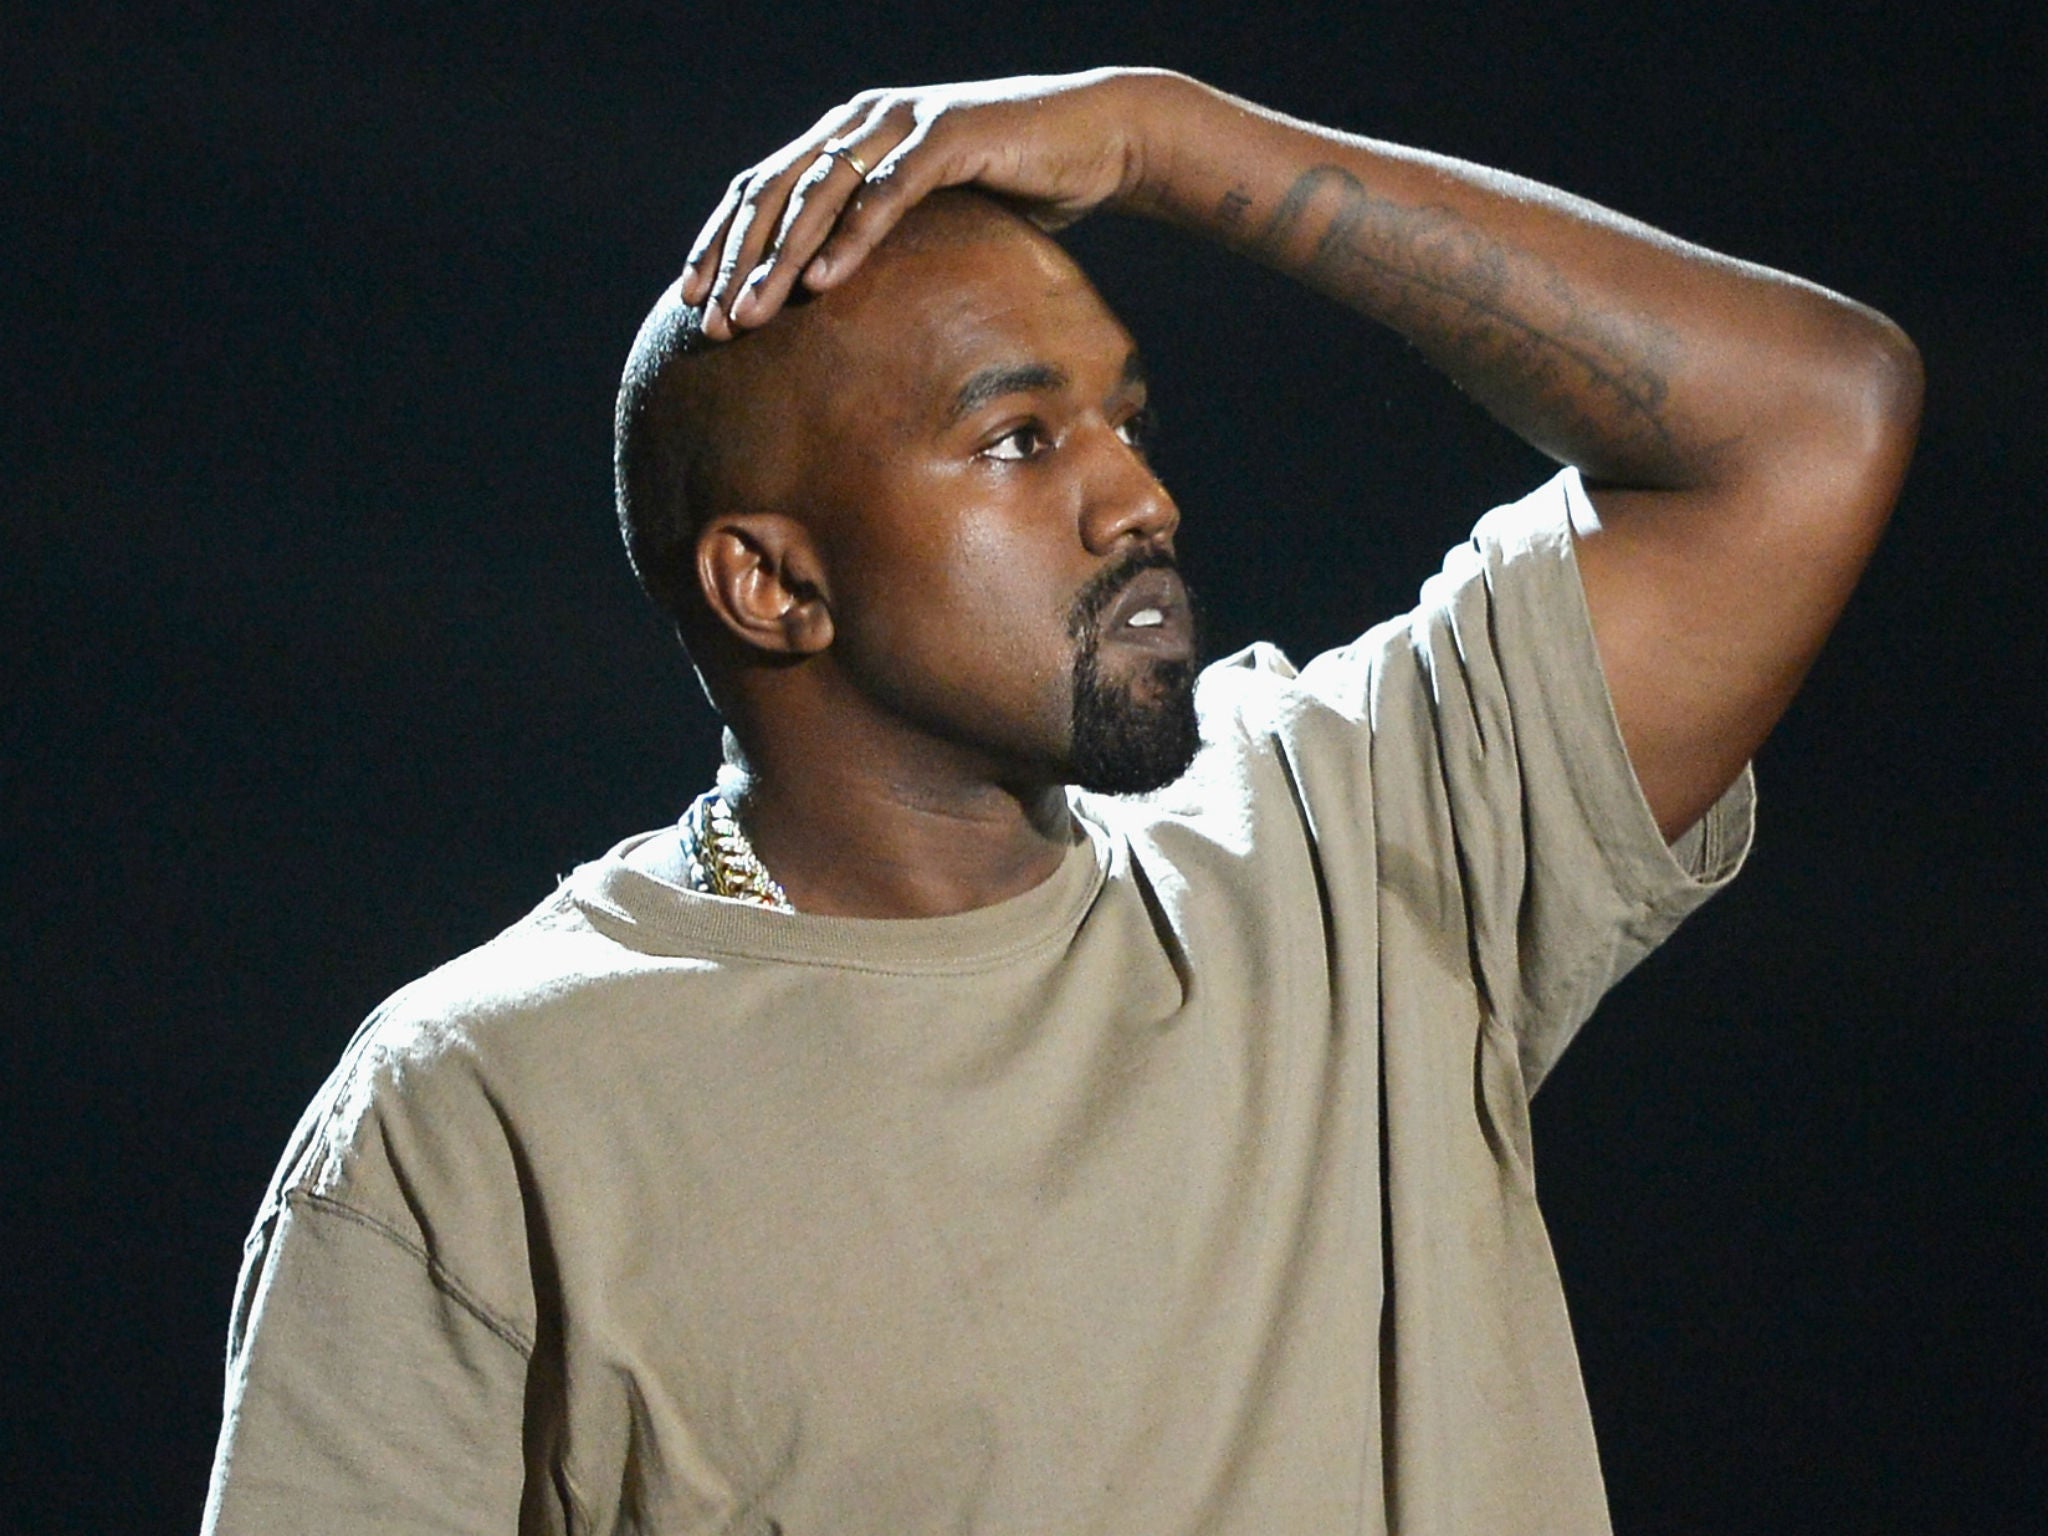 Read Kanye West's incredible VMAs acceptance speech in full as rapper